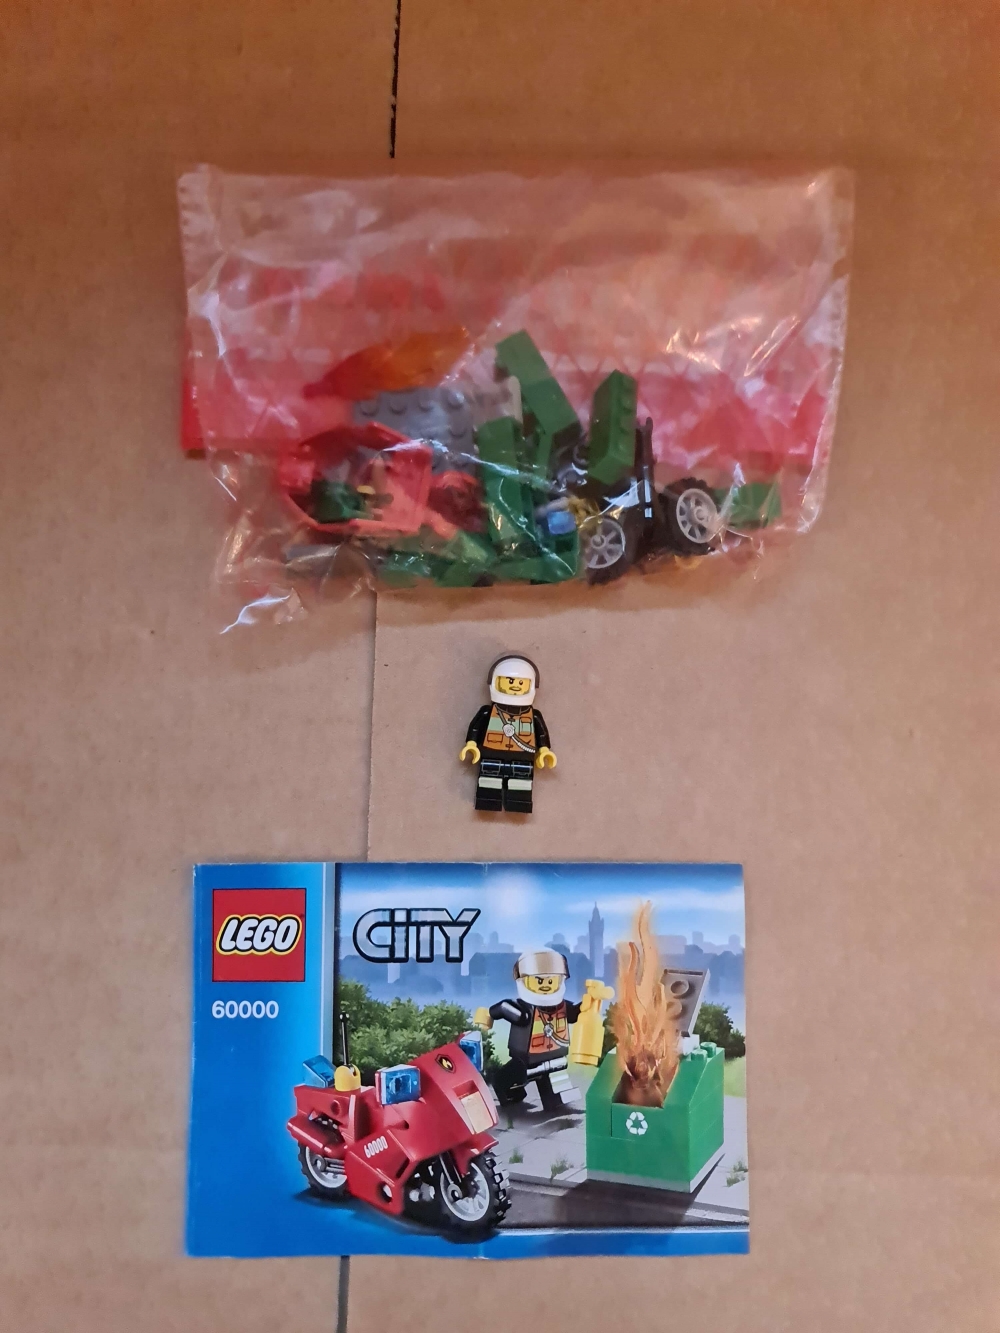 Sett 60000 fra Lego City serien.
Flott sett. Komplett med manual.